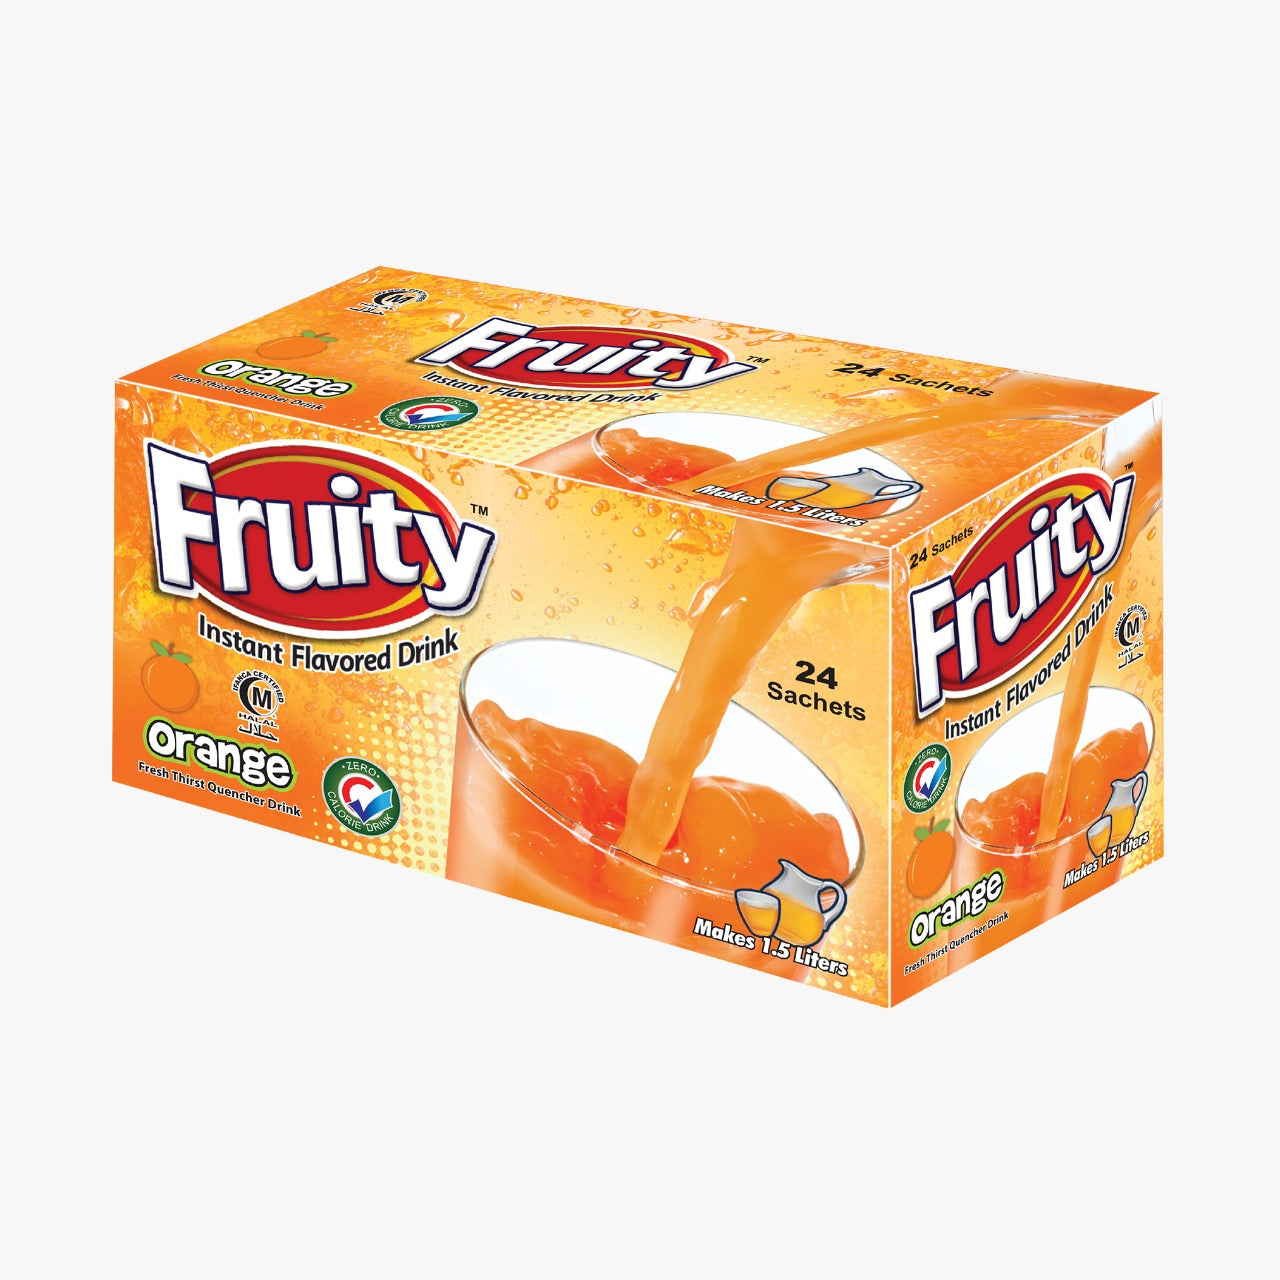 Fruity Instant Drink Orange. Box